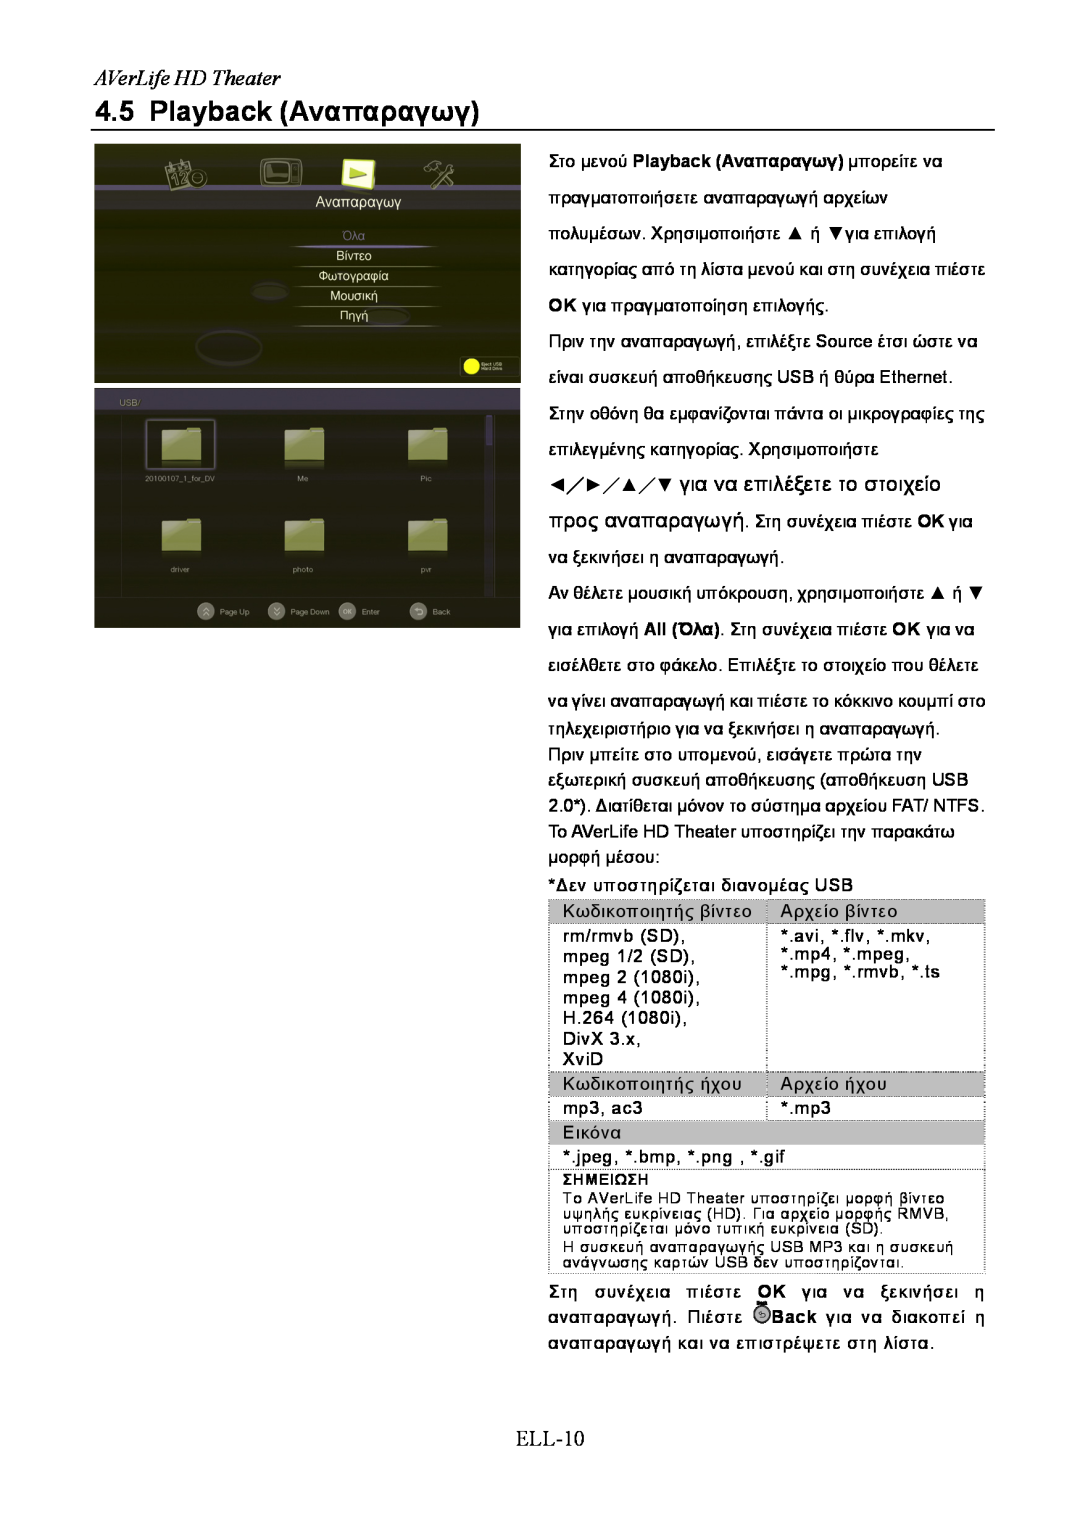 AVerMedia Technologies A211 user manual Playback Αναπαραγωγ, AVerLife HD Theater, ／／／ για να επιλέξετε το στοιχείο, ELL-10 